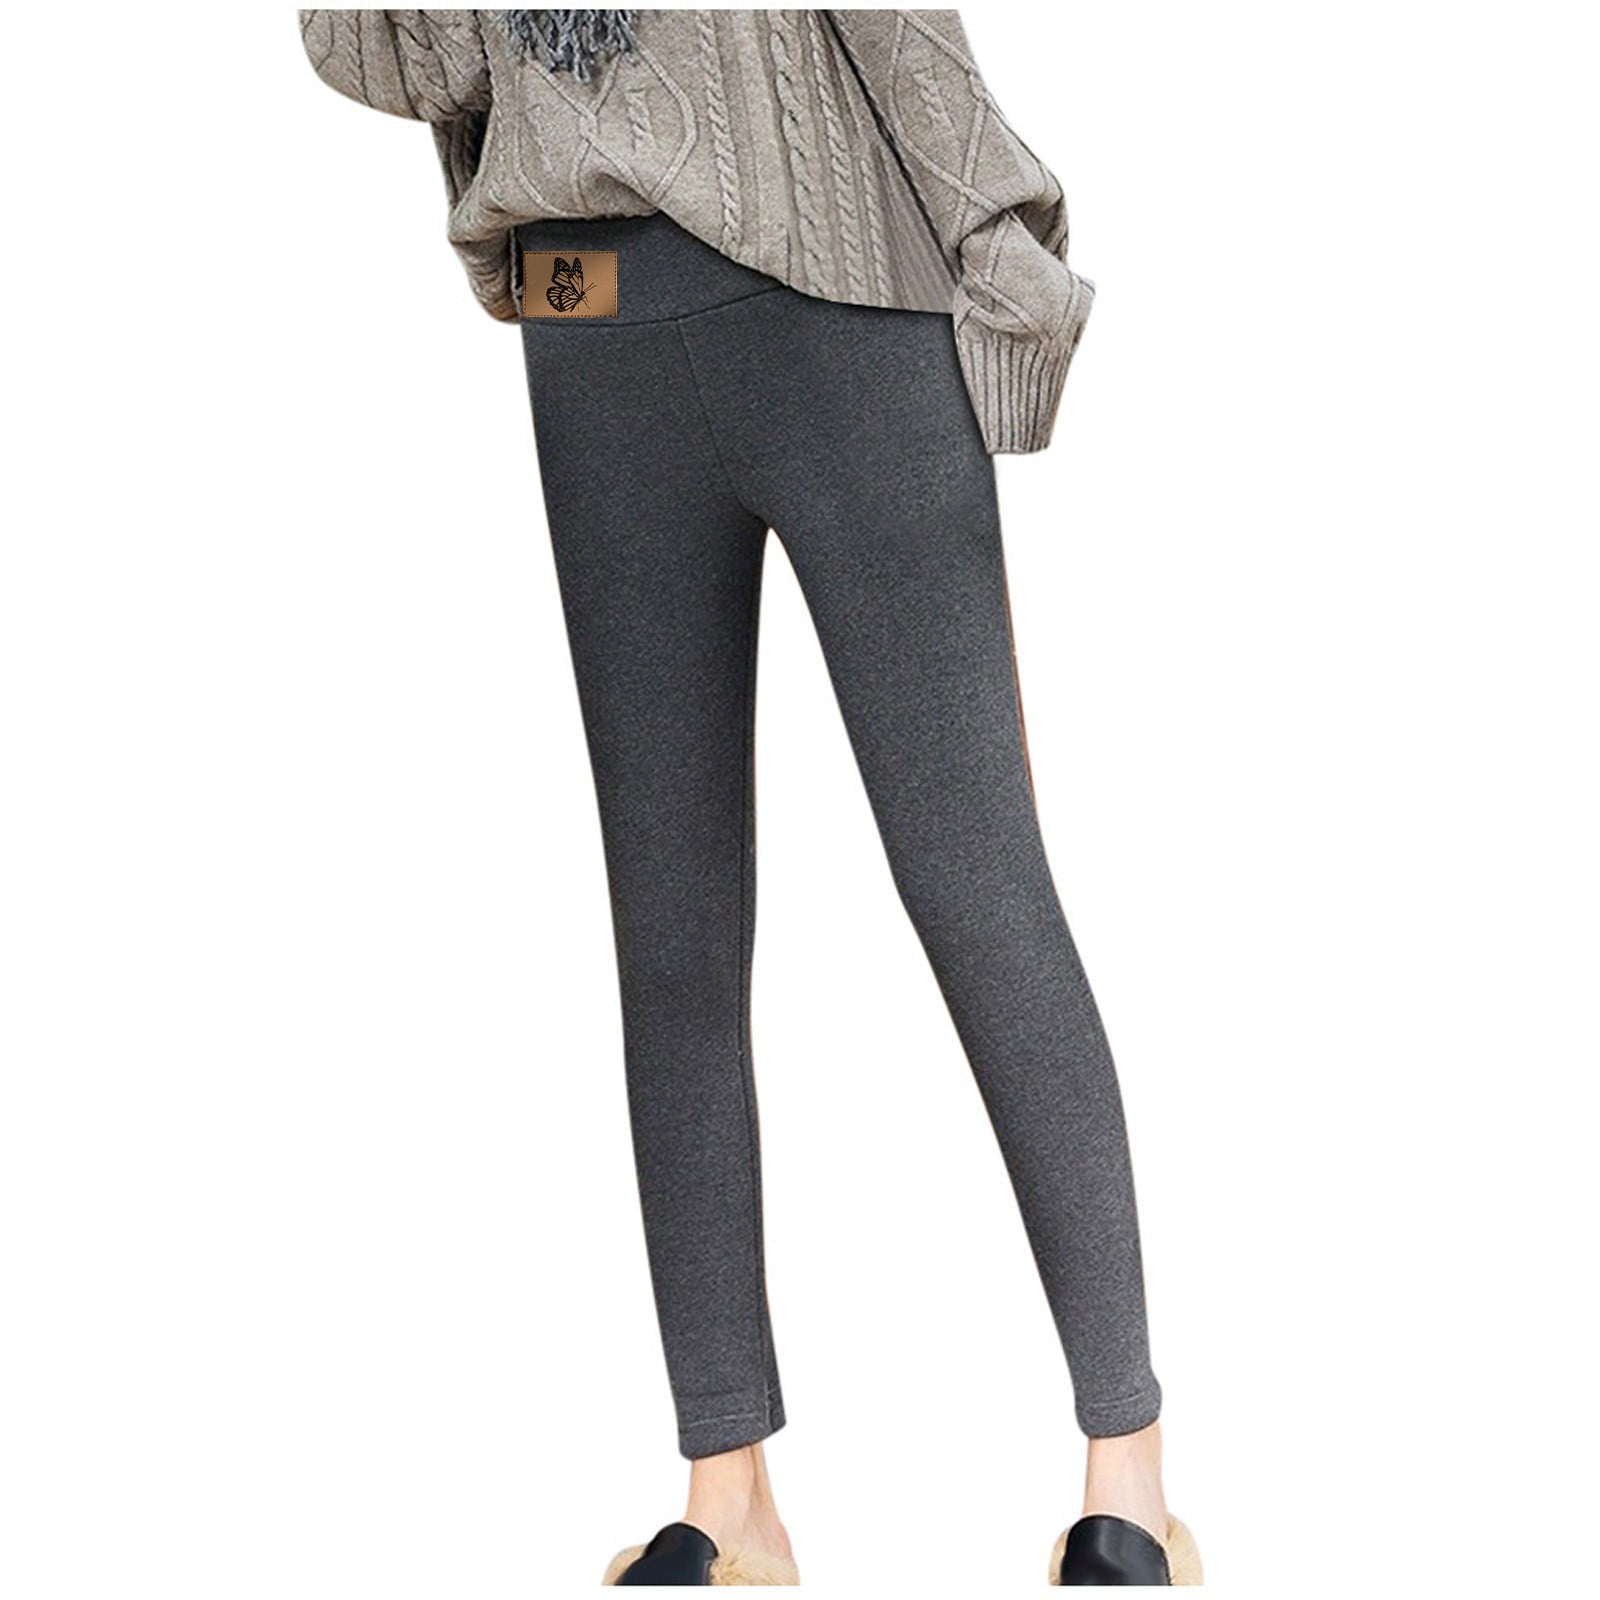 TruFit Women's Fleece Lined Leggings High Waist Yoga Pants, Casual Base  Layer Plus Size, 3 Pack